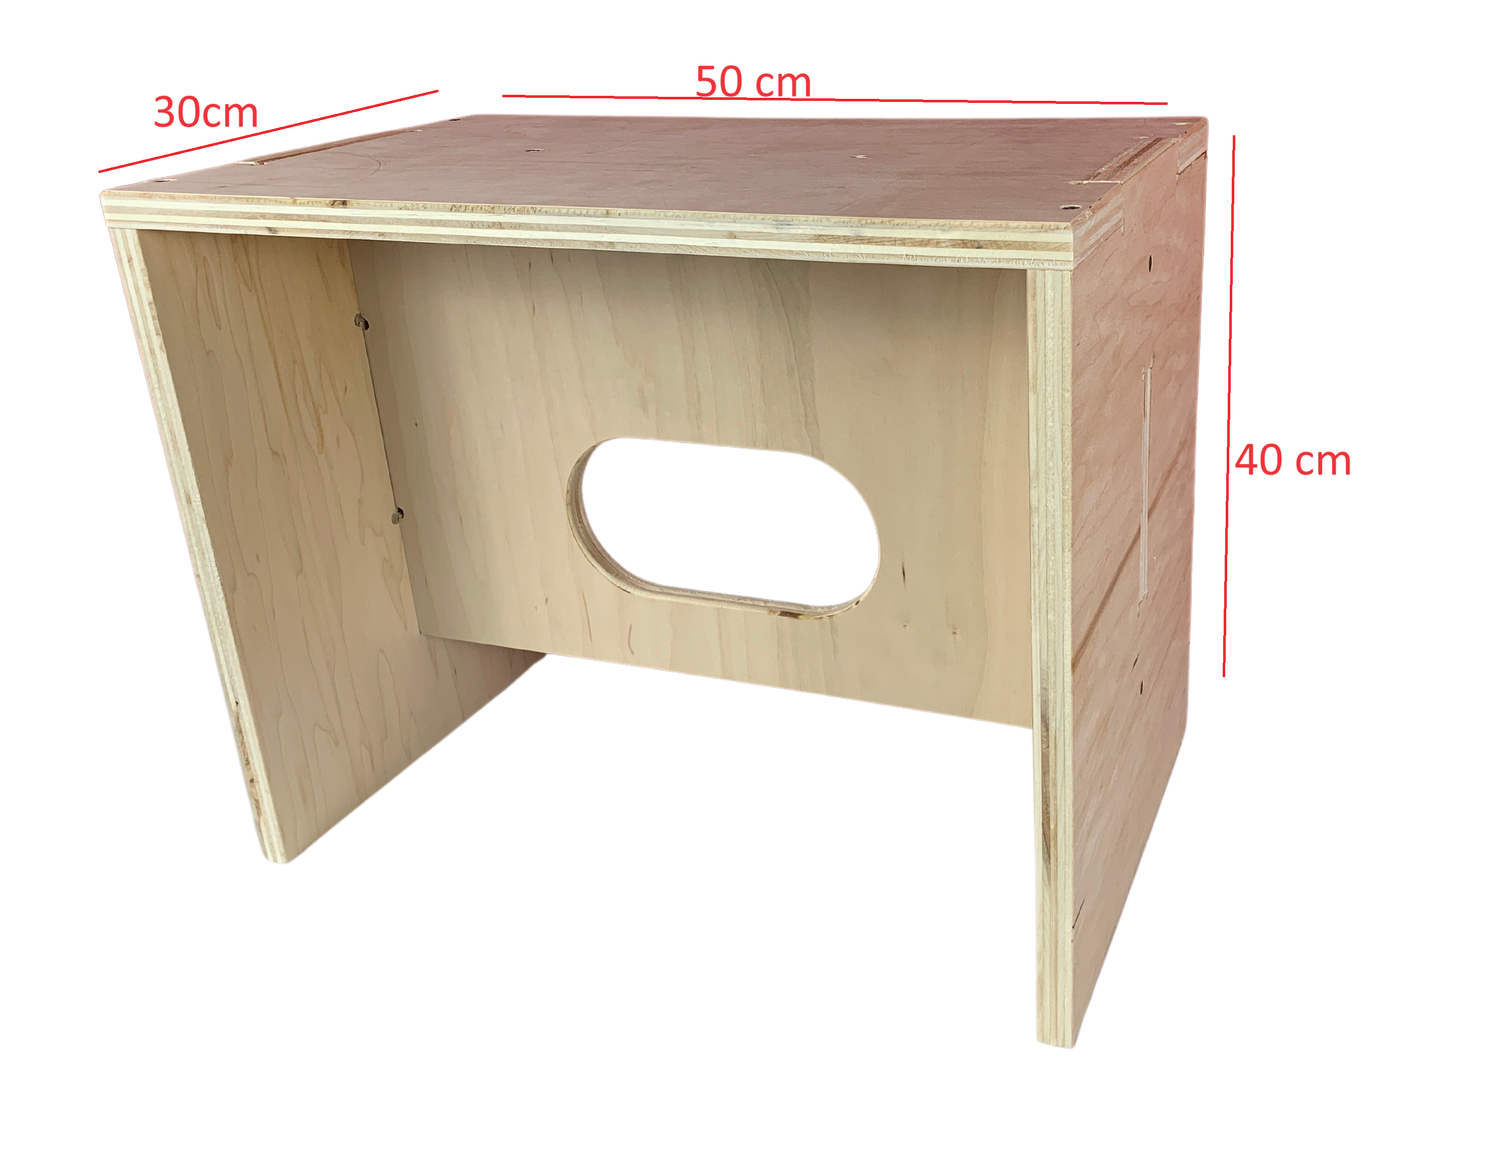 AnthroFlex Anthropometric Bench (Sitting Height Stool)